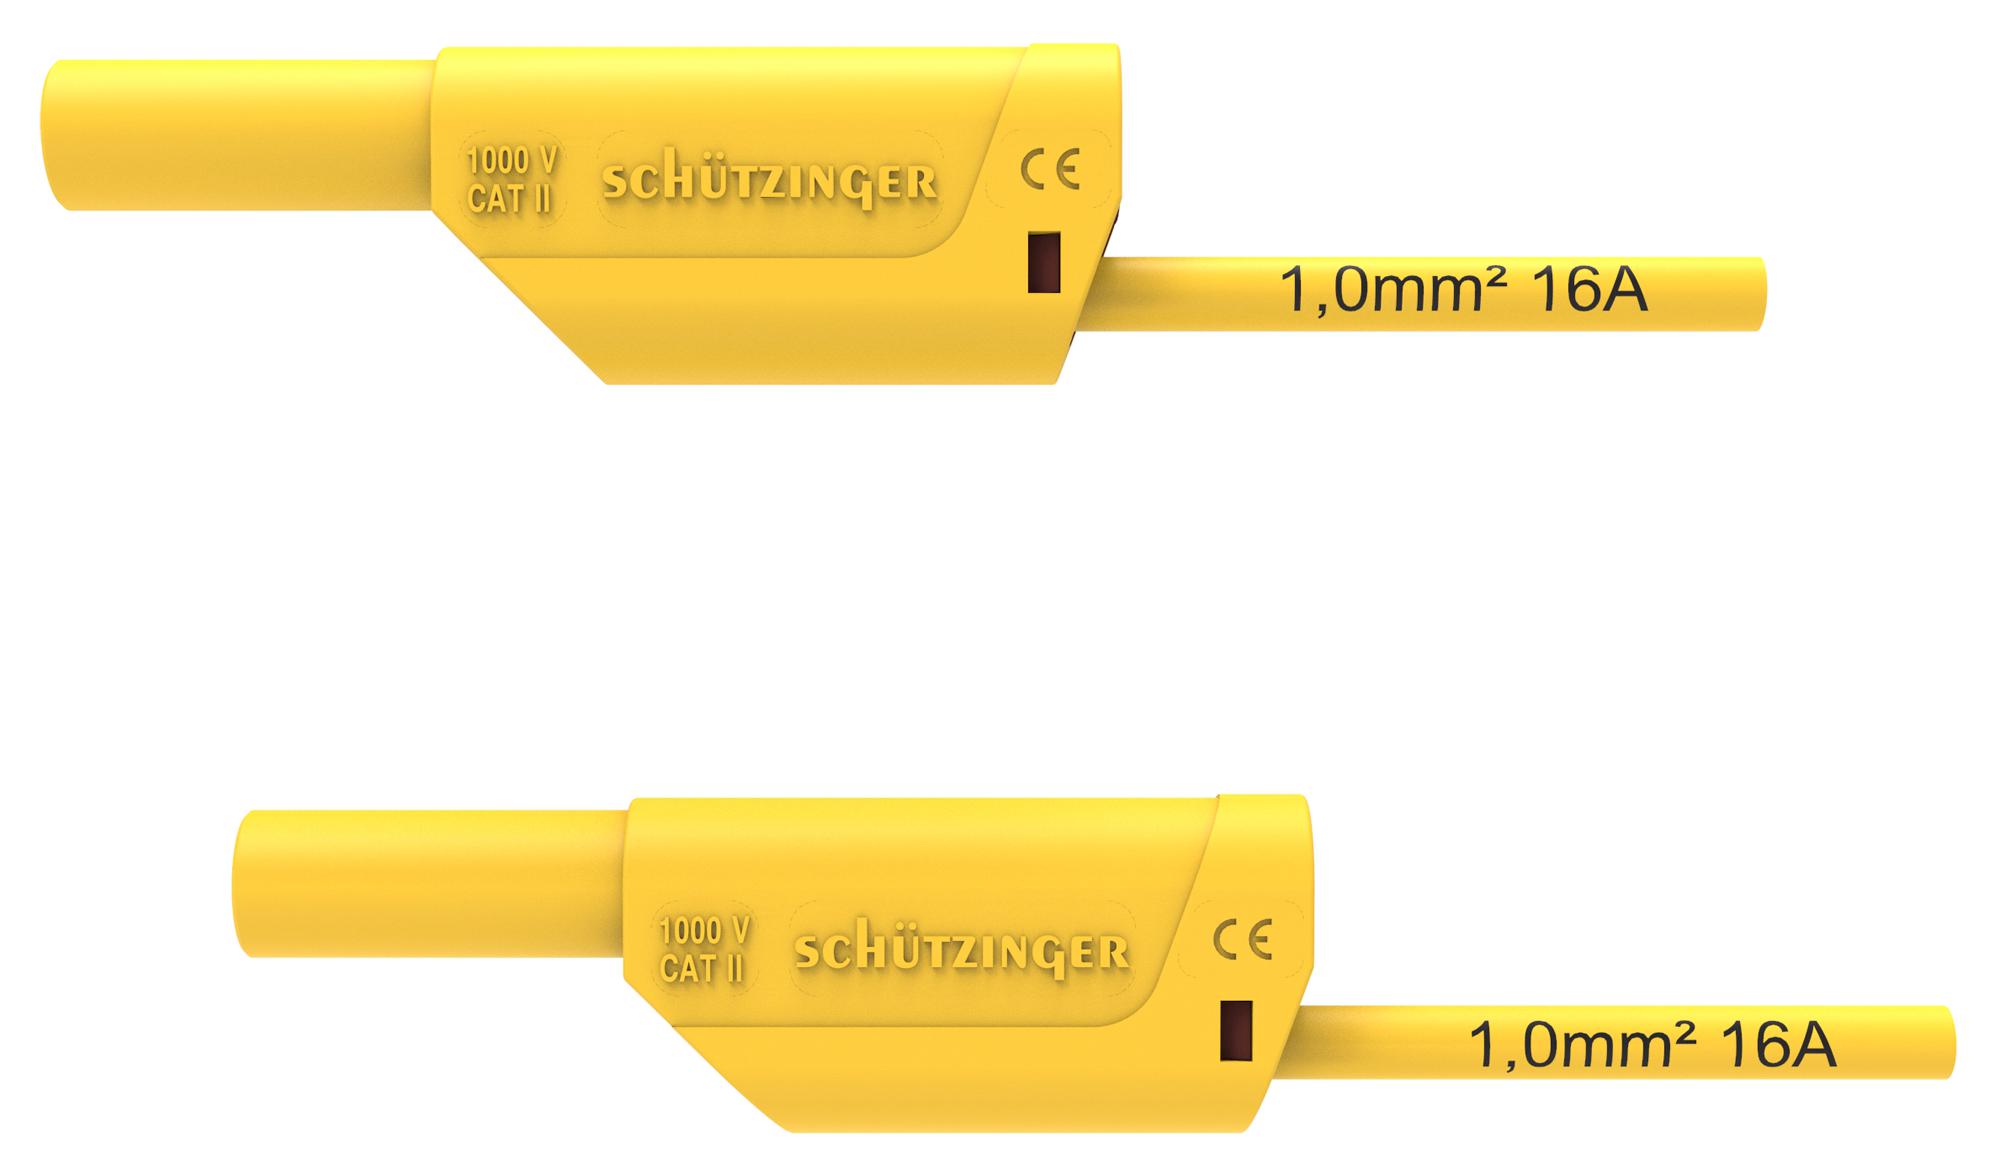 Schutzinger Di Vsfk 8500 / 1 / 100 / Ge 4mm Banana Plug-Sq, Shrouded, Yellow, 1M